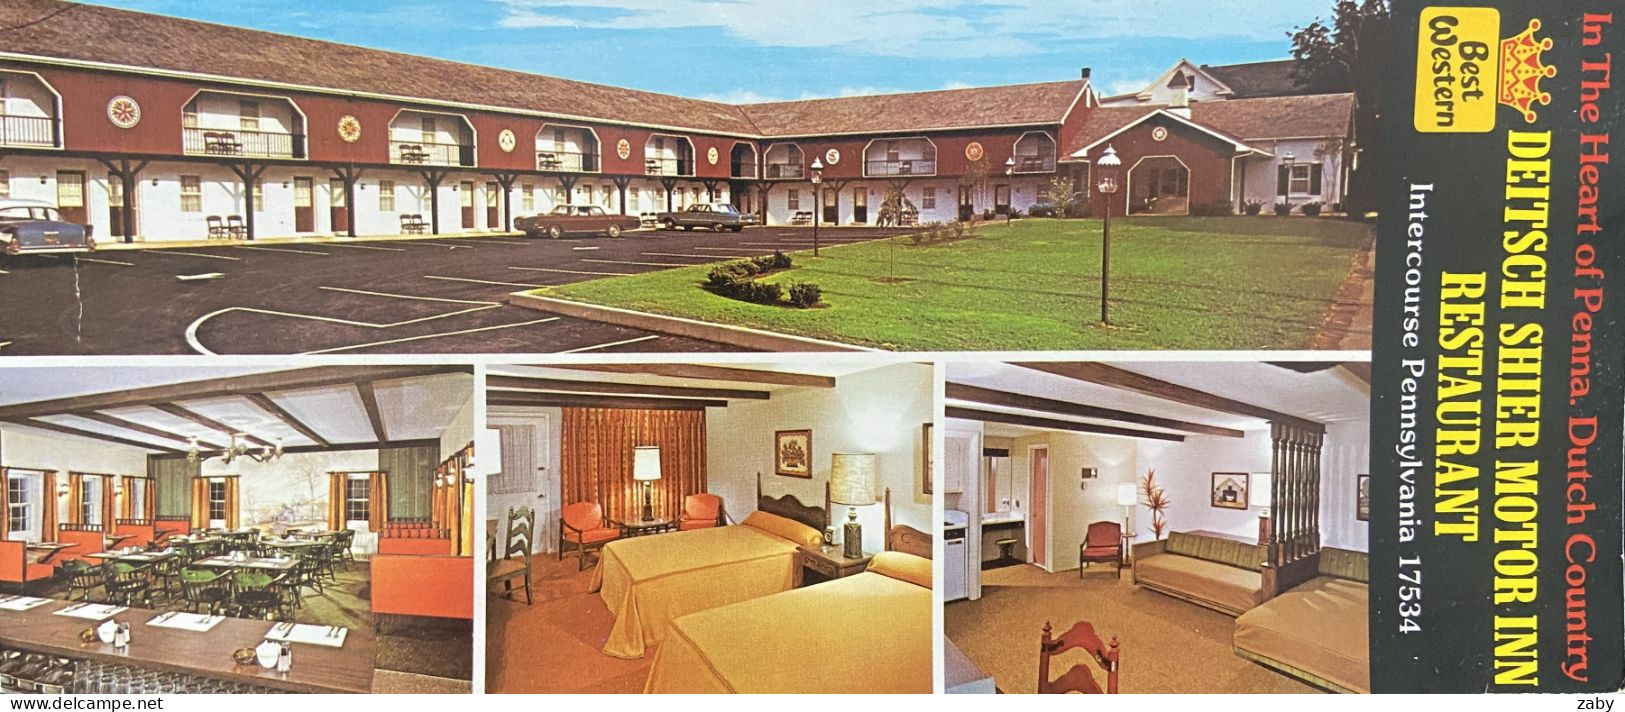 Best Western Deitsch Shier Motor Inn Intercourse Pennsylvania USA - Hotels & Restaurants